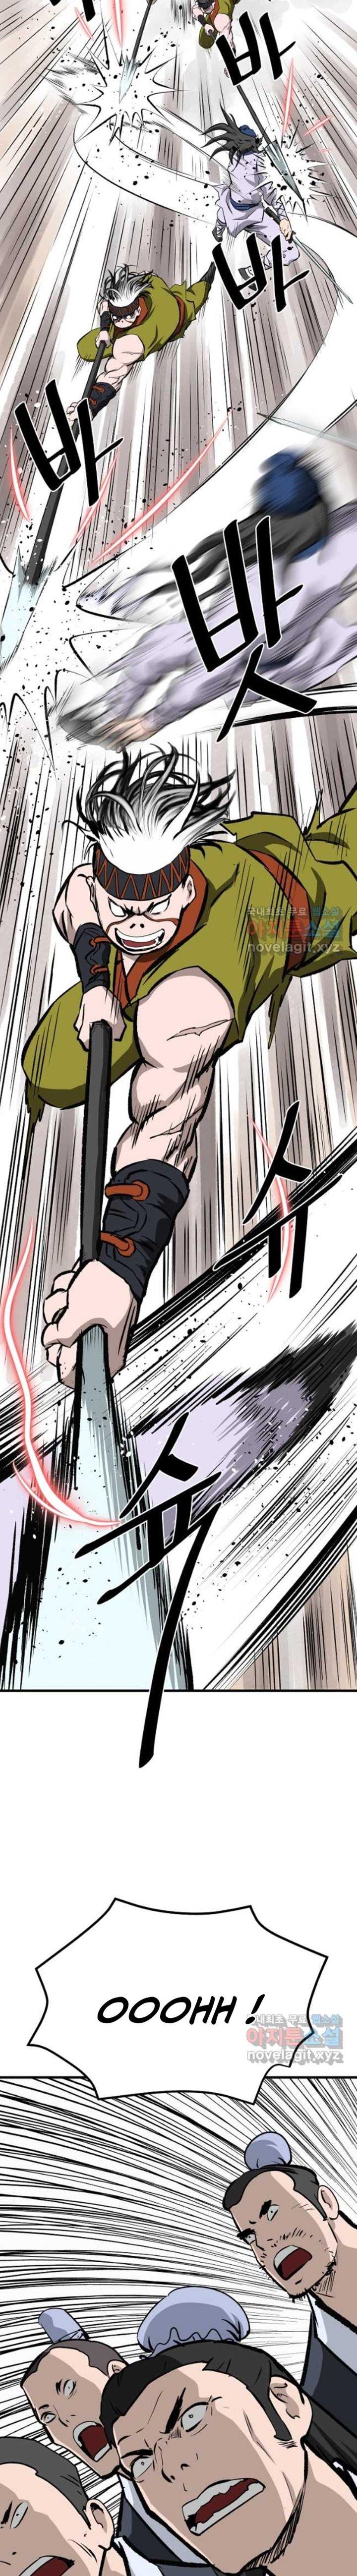 Archer Sword God: Descendants of the Archer Chapter 54